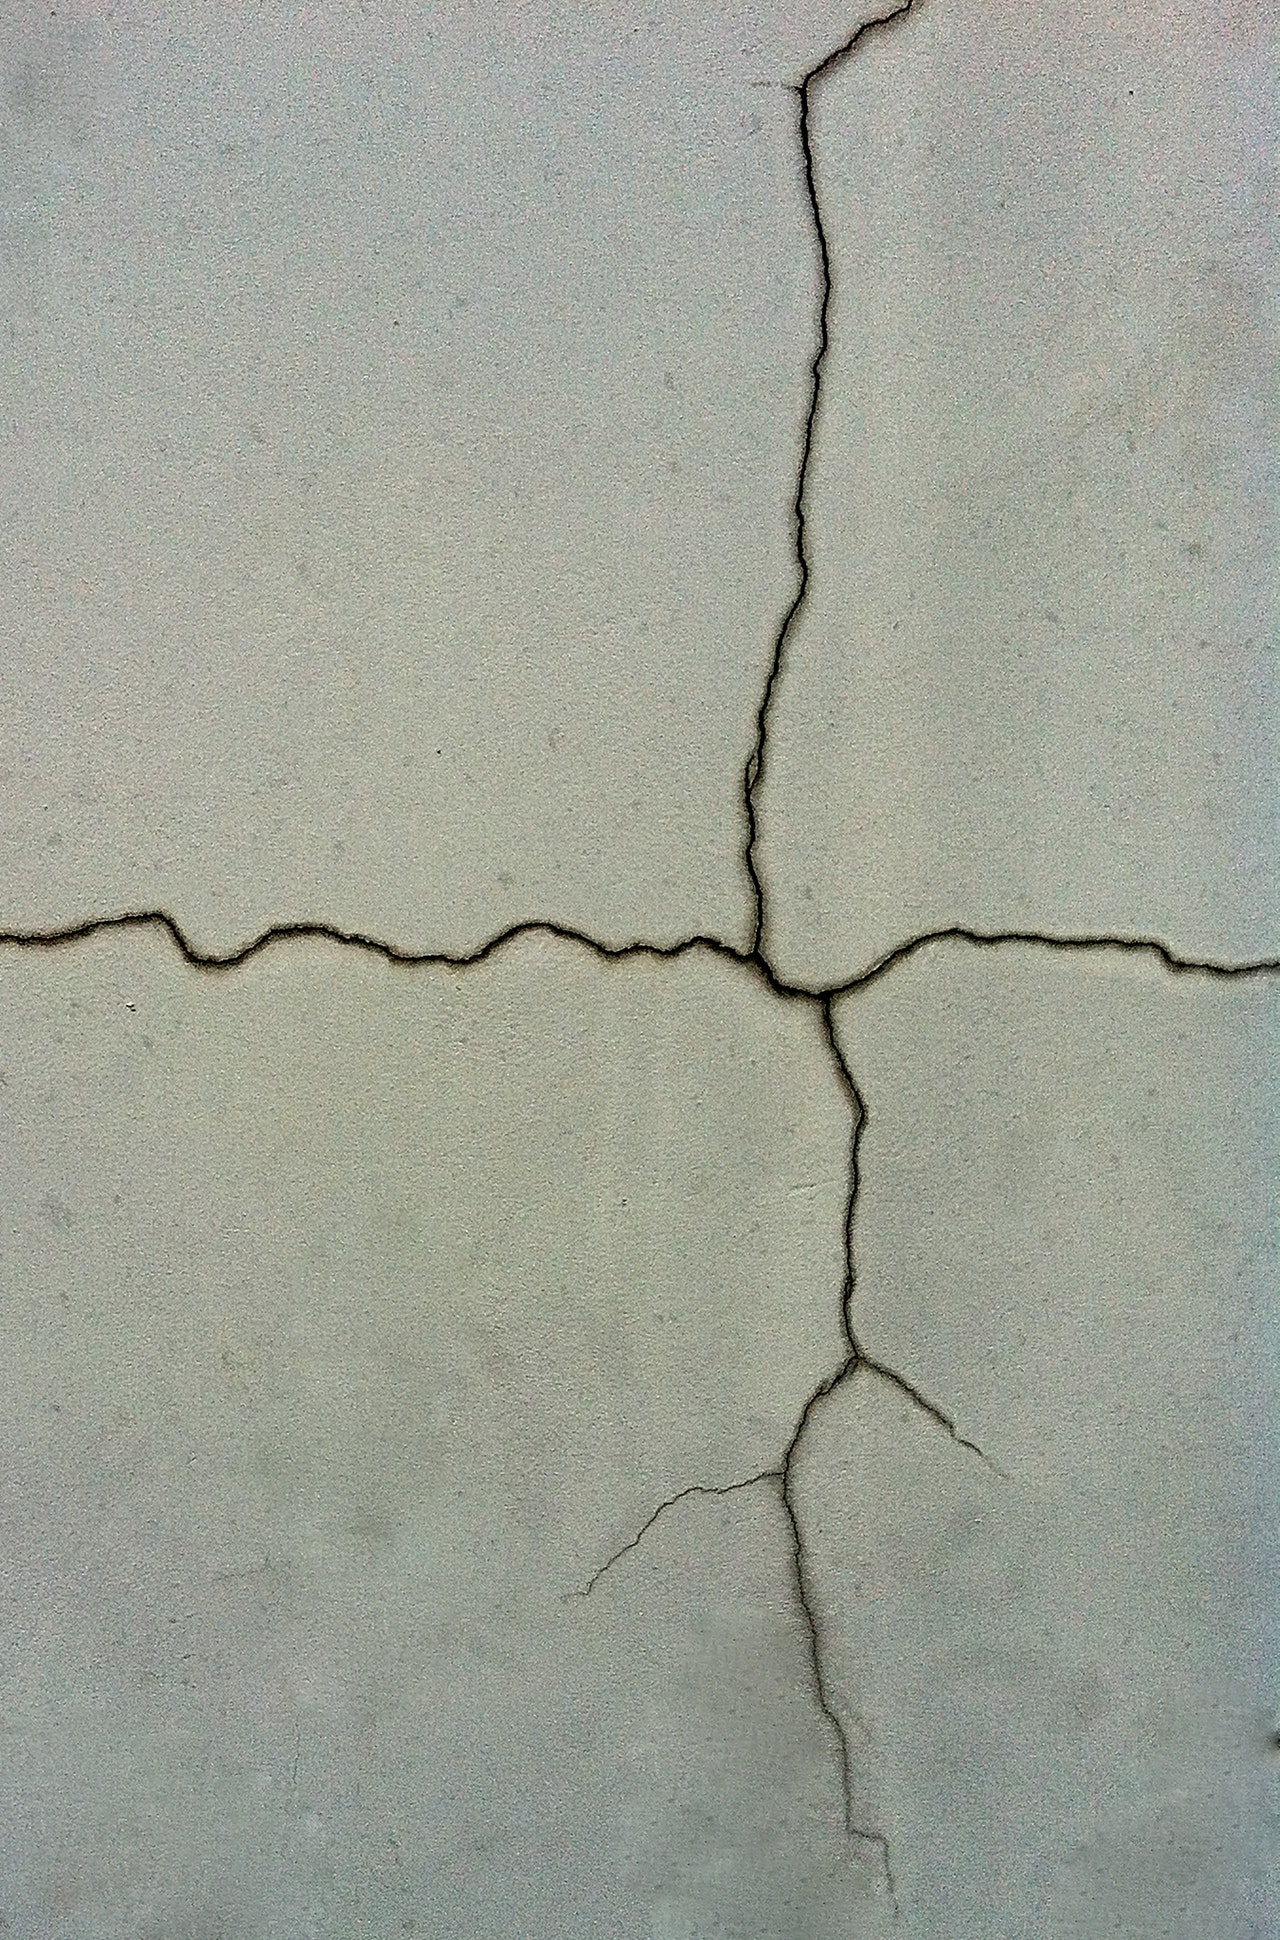 crack-wall